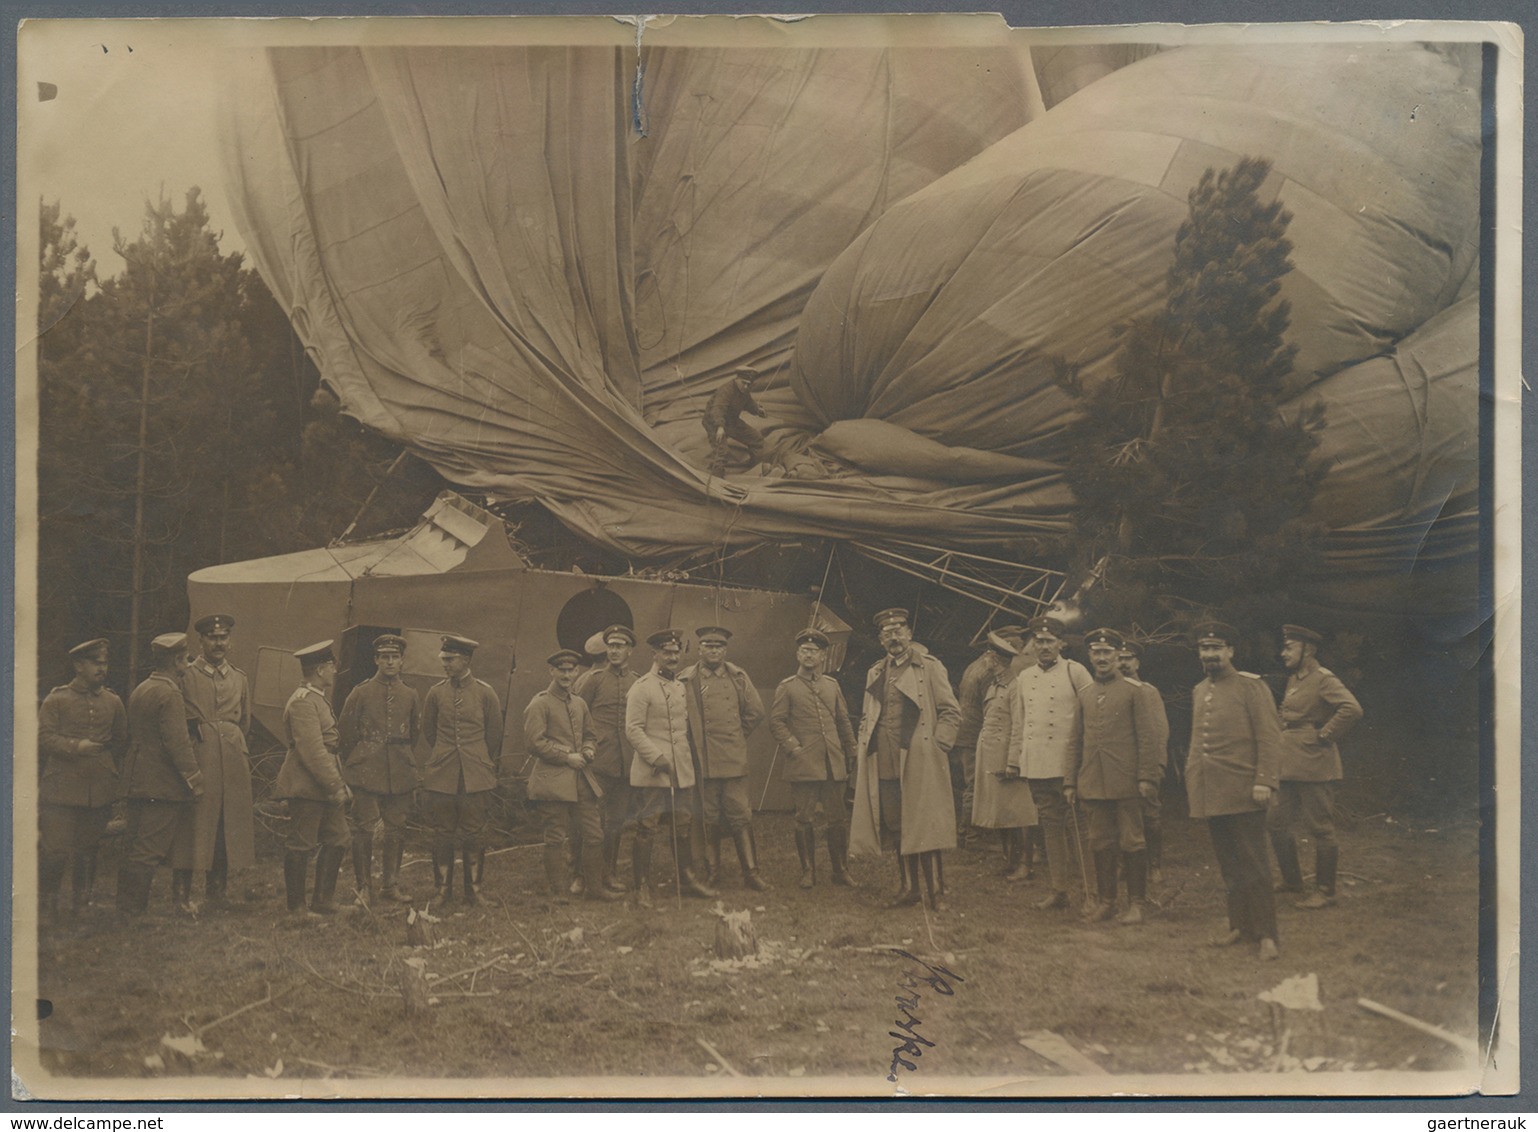 Thematik: Zeppelin / zeppelin: 1915. Very rare series of four original, period photographs of the Fr